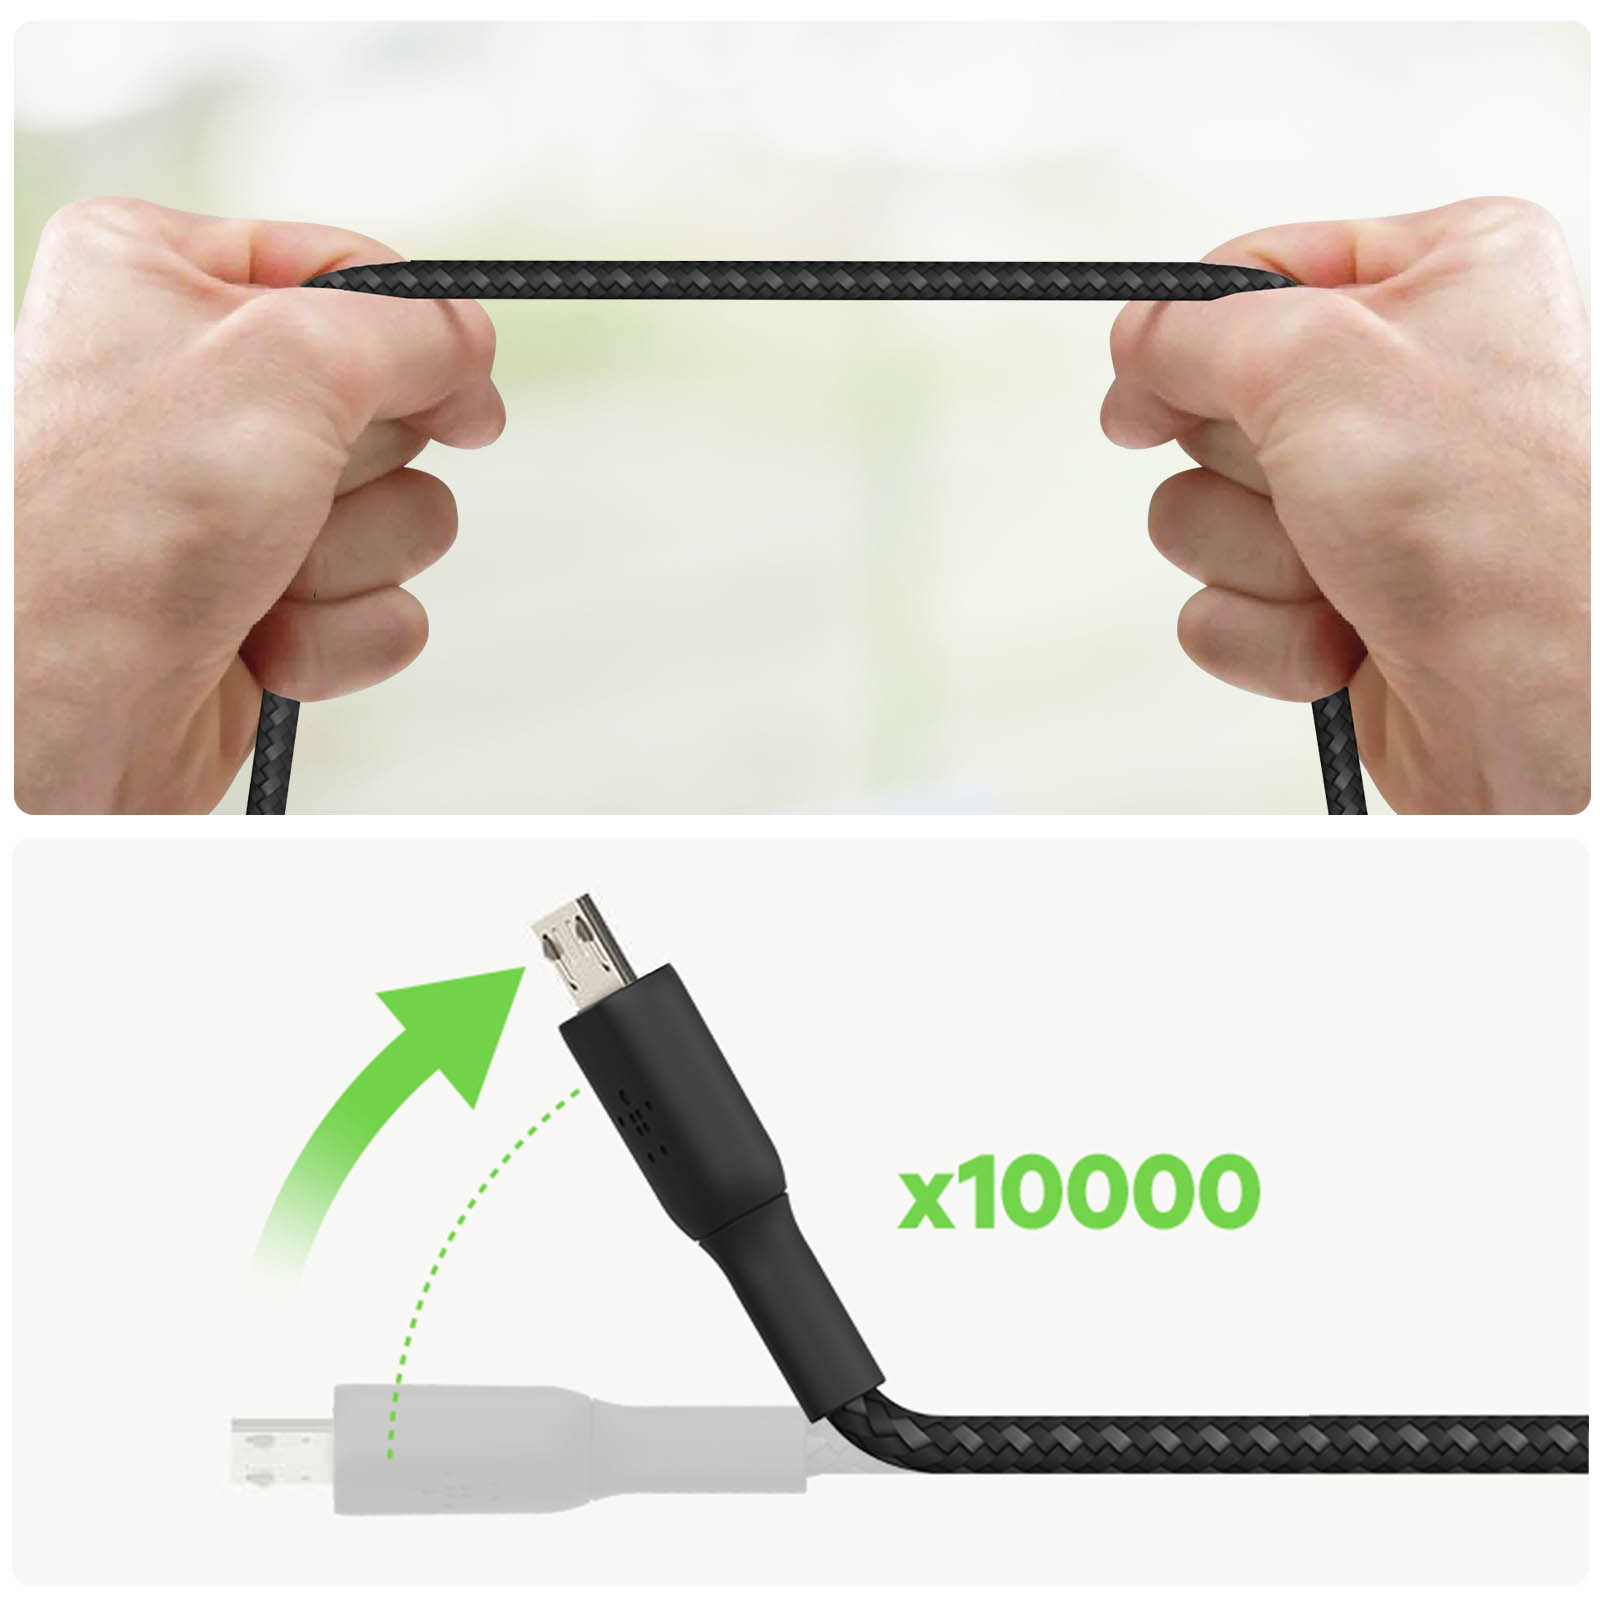 BELKIN USB / USB-Kabel Nylonkabel Micro-USB